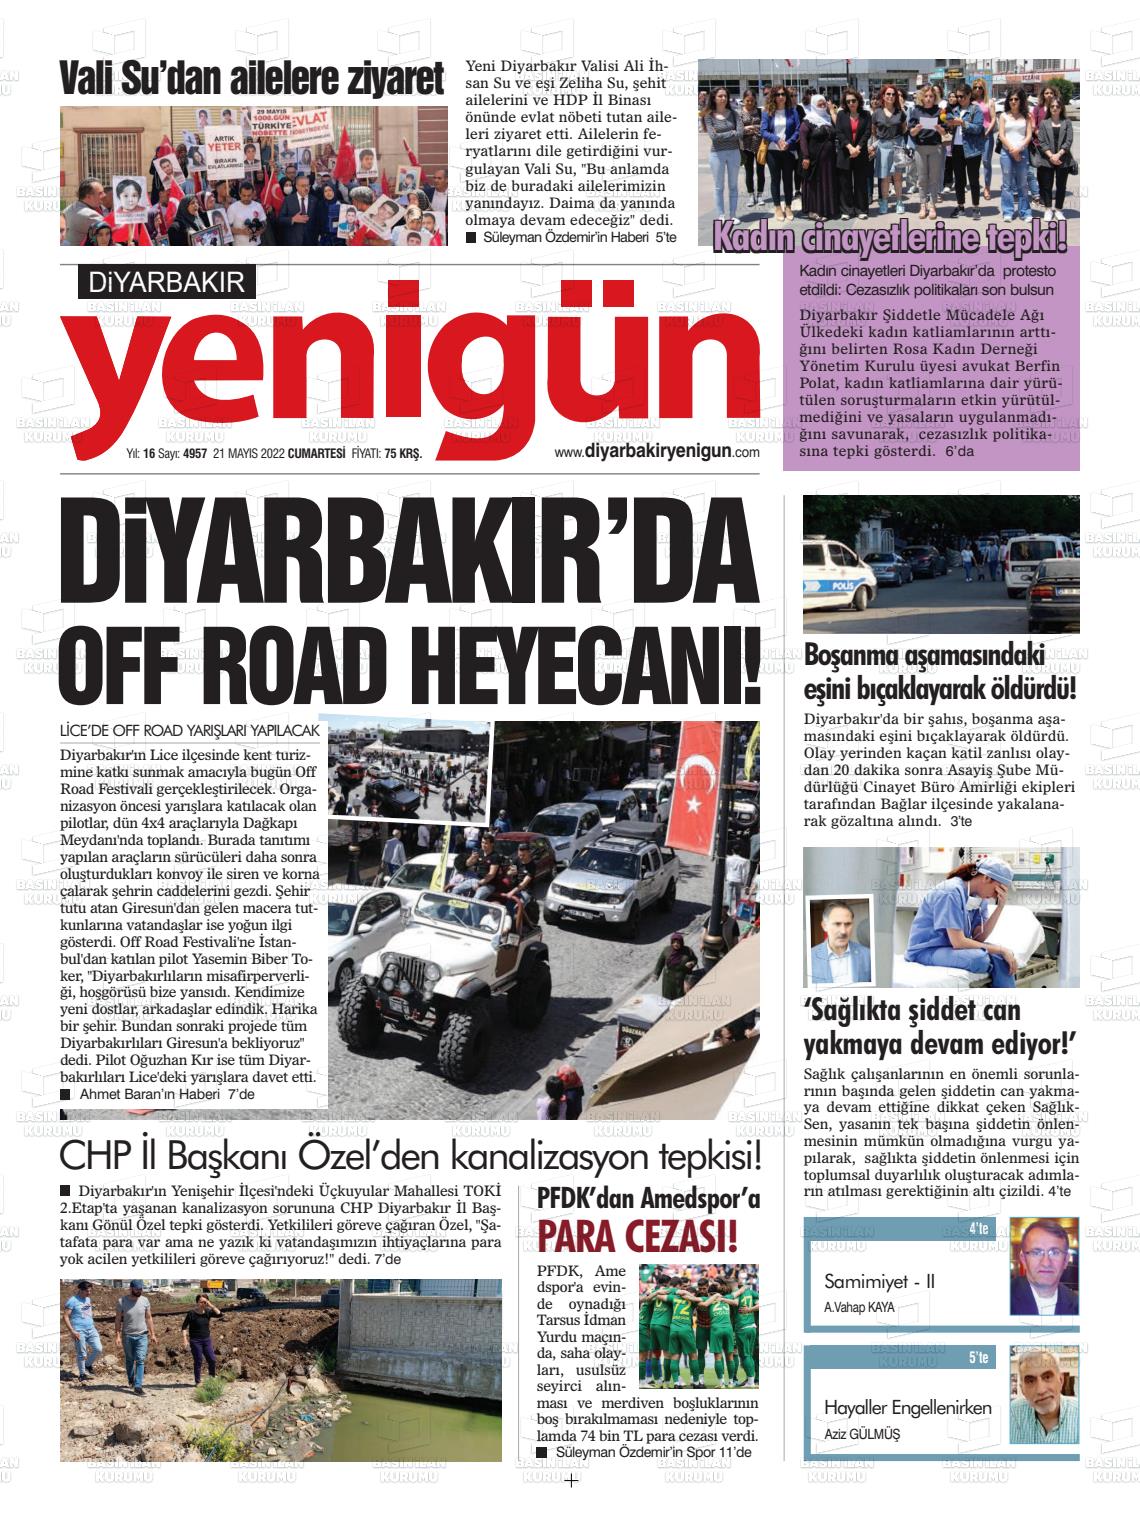 21 Mayıs 2022 Diyarbakır Yenigün Gazete Manşeti